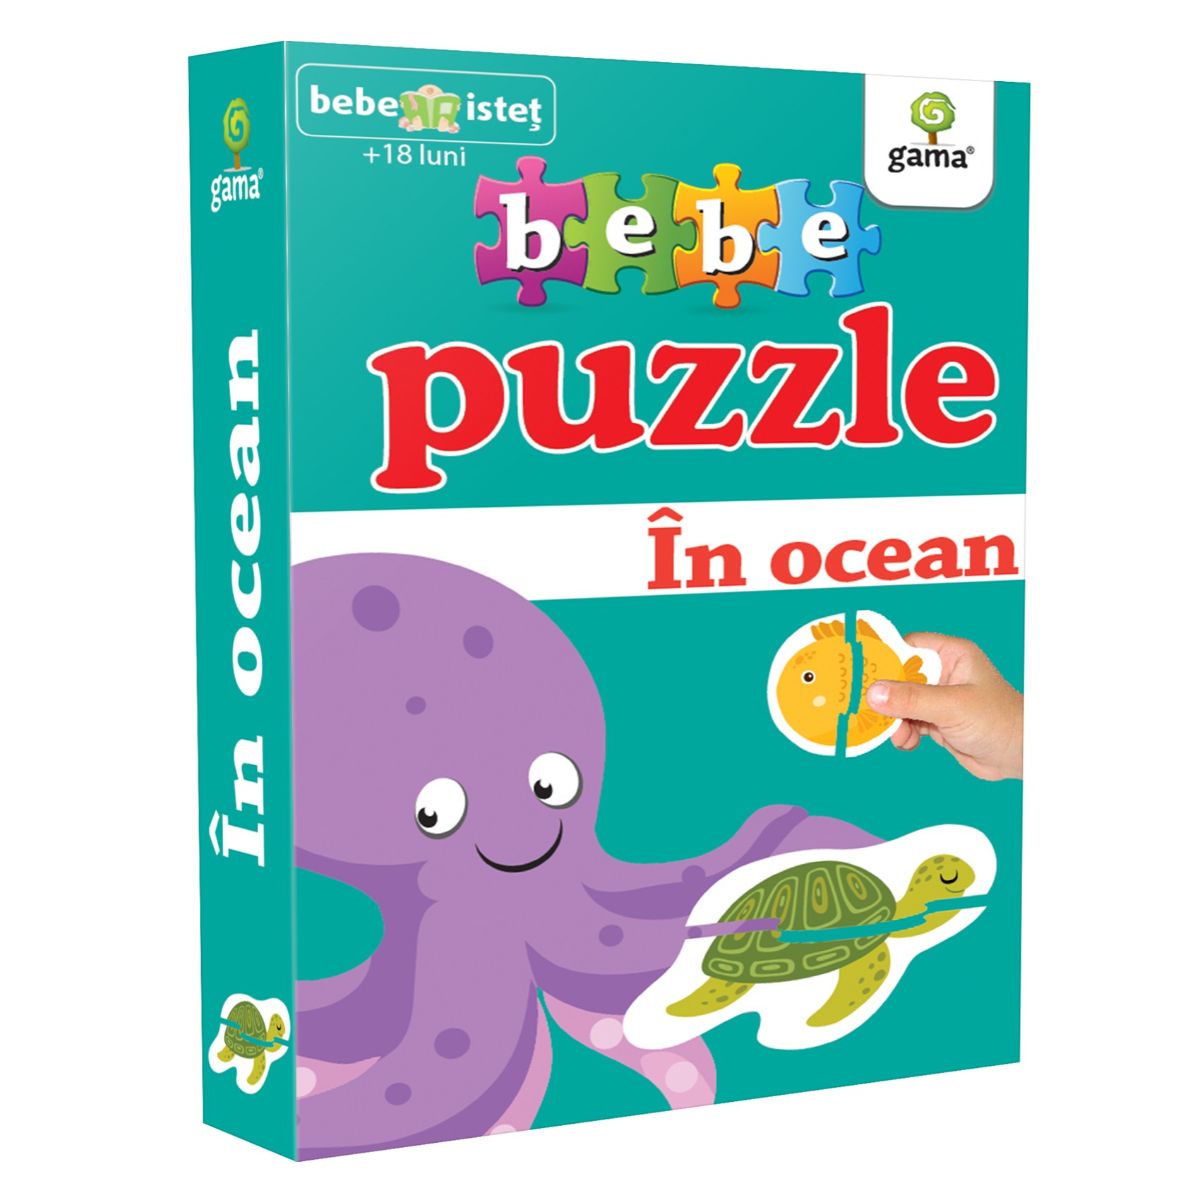 In ocean, Bebe puzzle